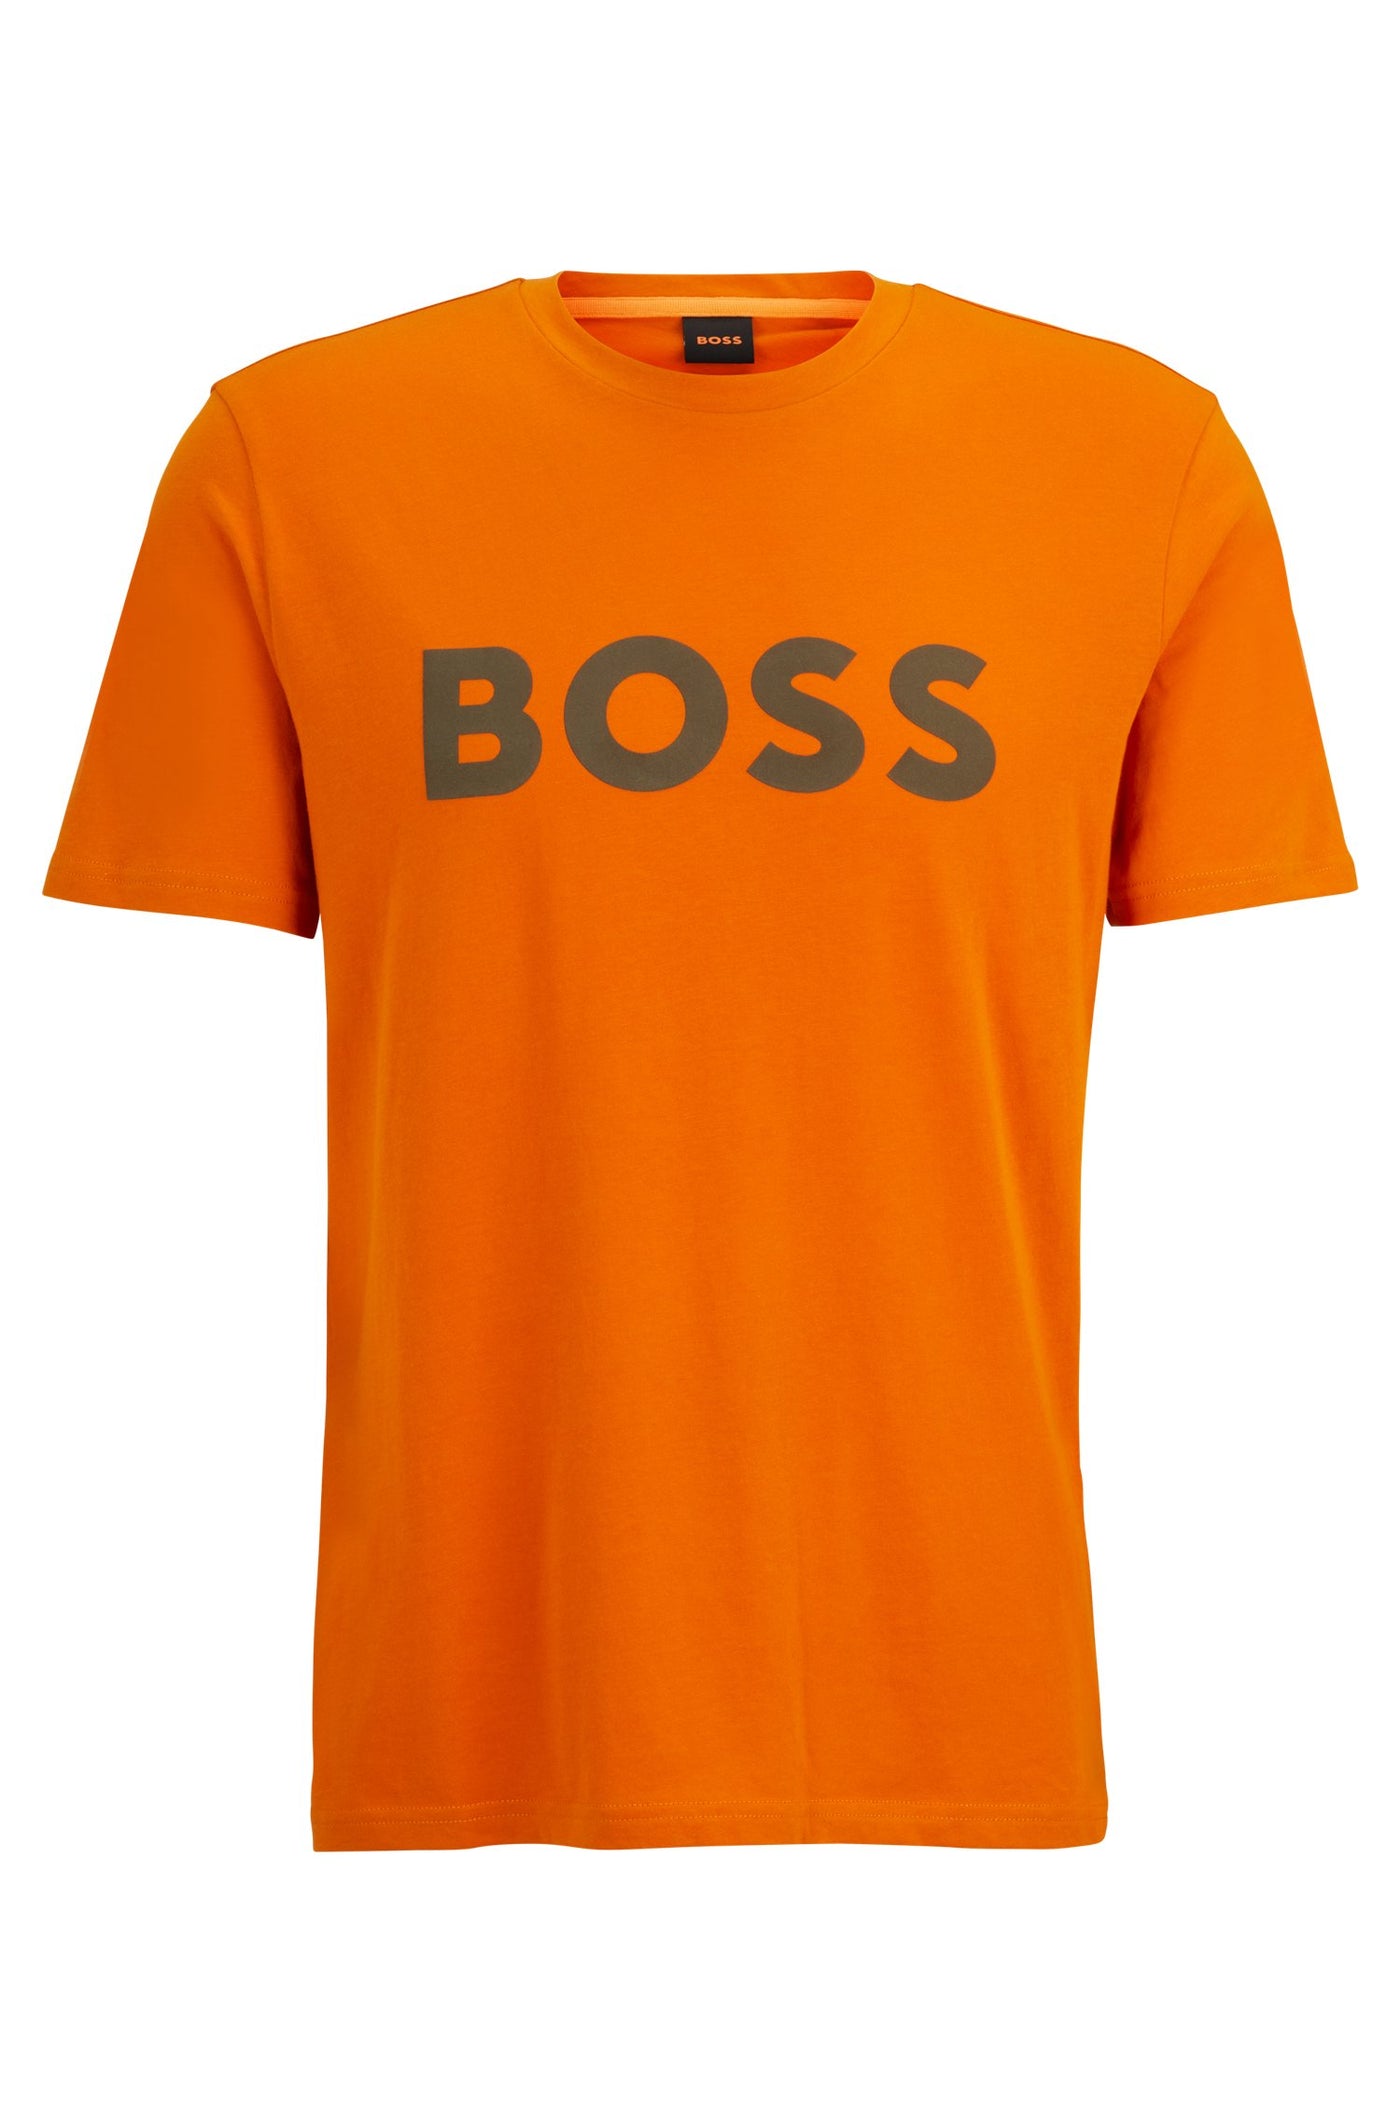 Thinking 1 T-shirt In Orange